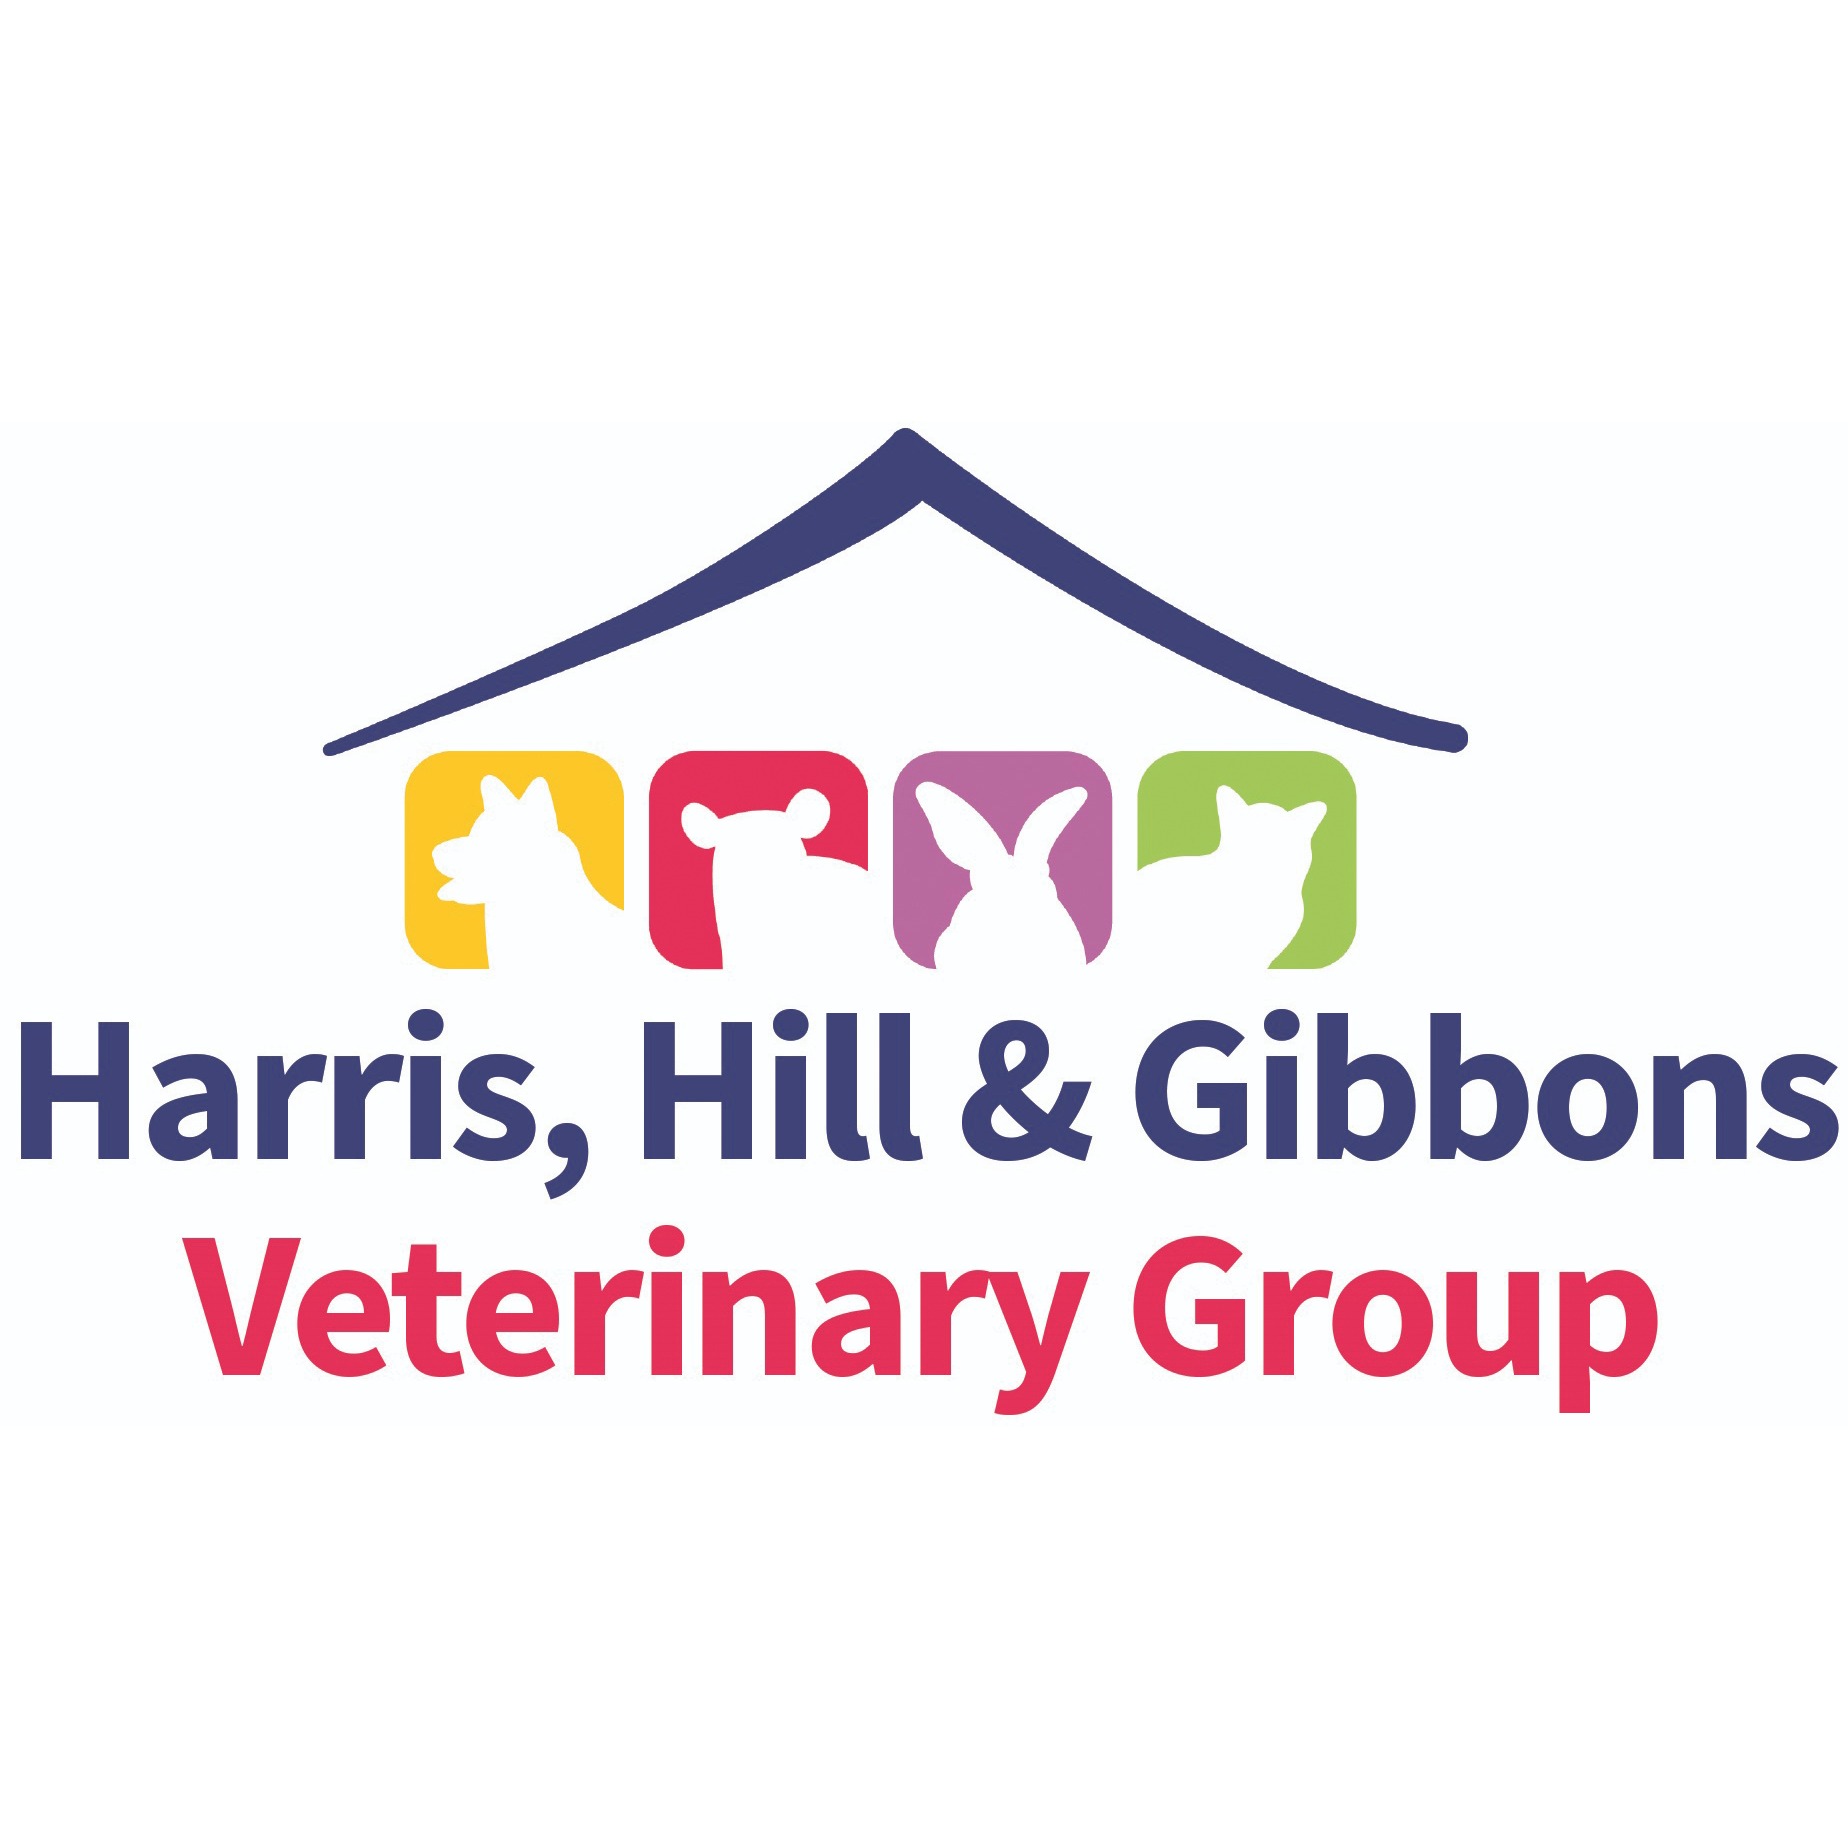 Harris, Hill & Gibbons Veterinary Group - Trowbridge Trowbridge 01225 760630